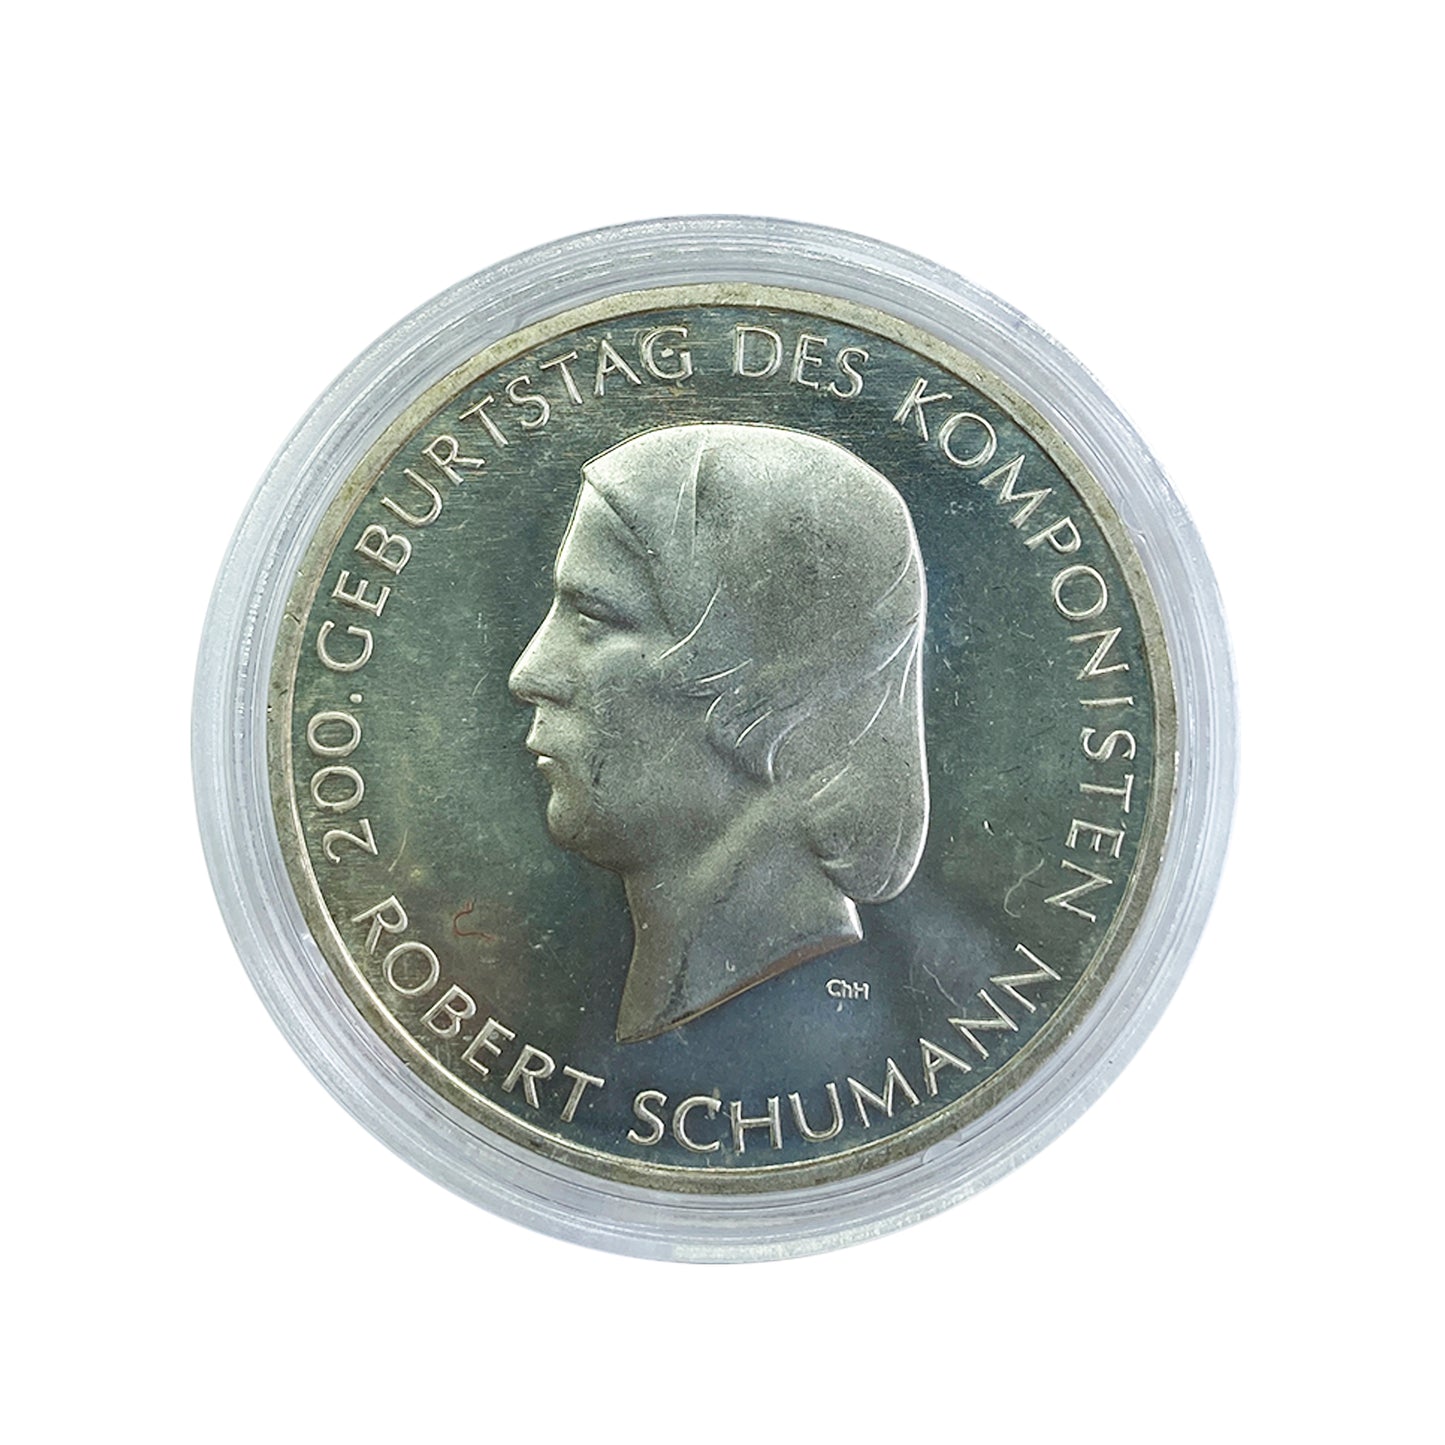 Alemania - Moneda 10 euros plata 2010 - 200 Aniversario del nacimiento de Robert Schumann